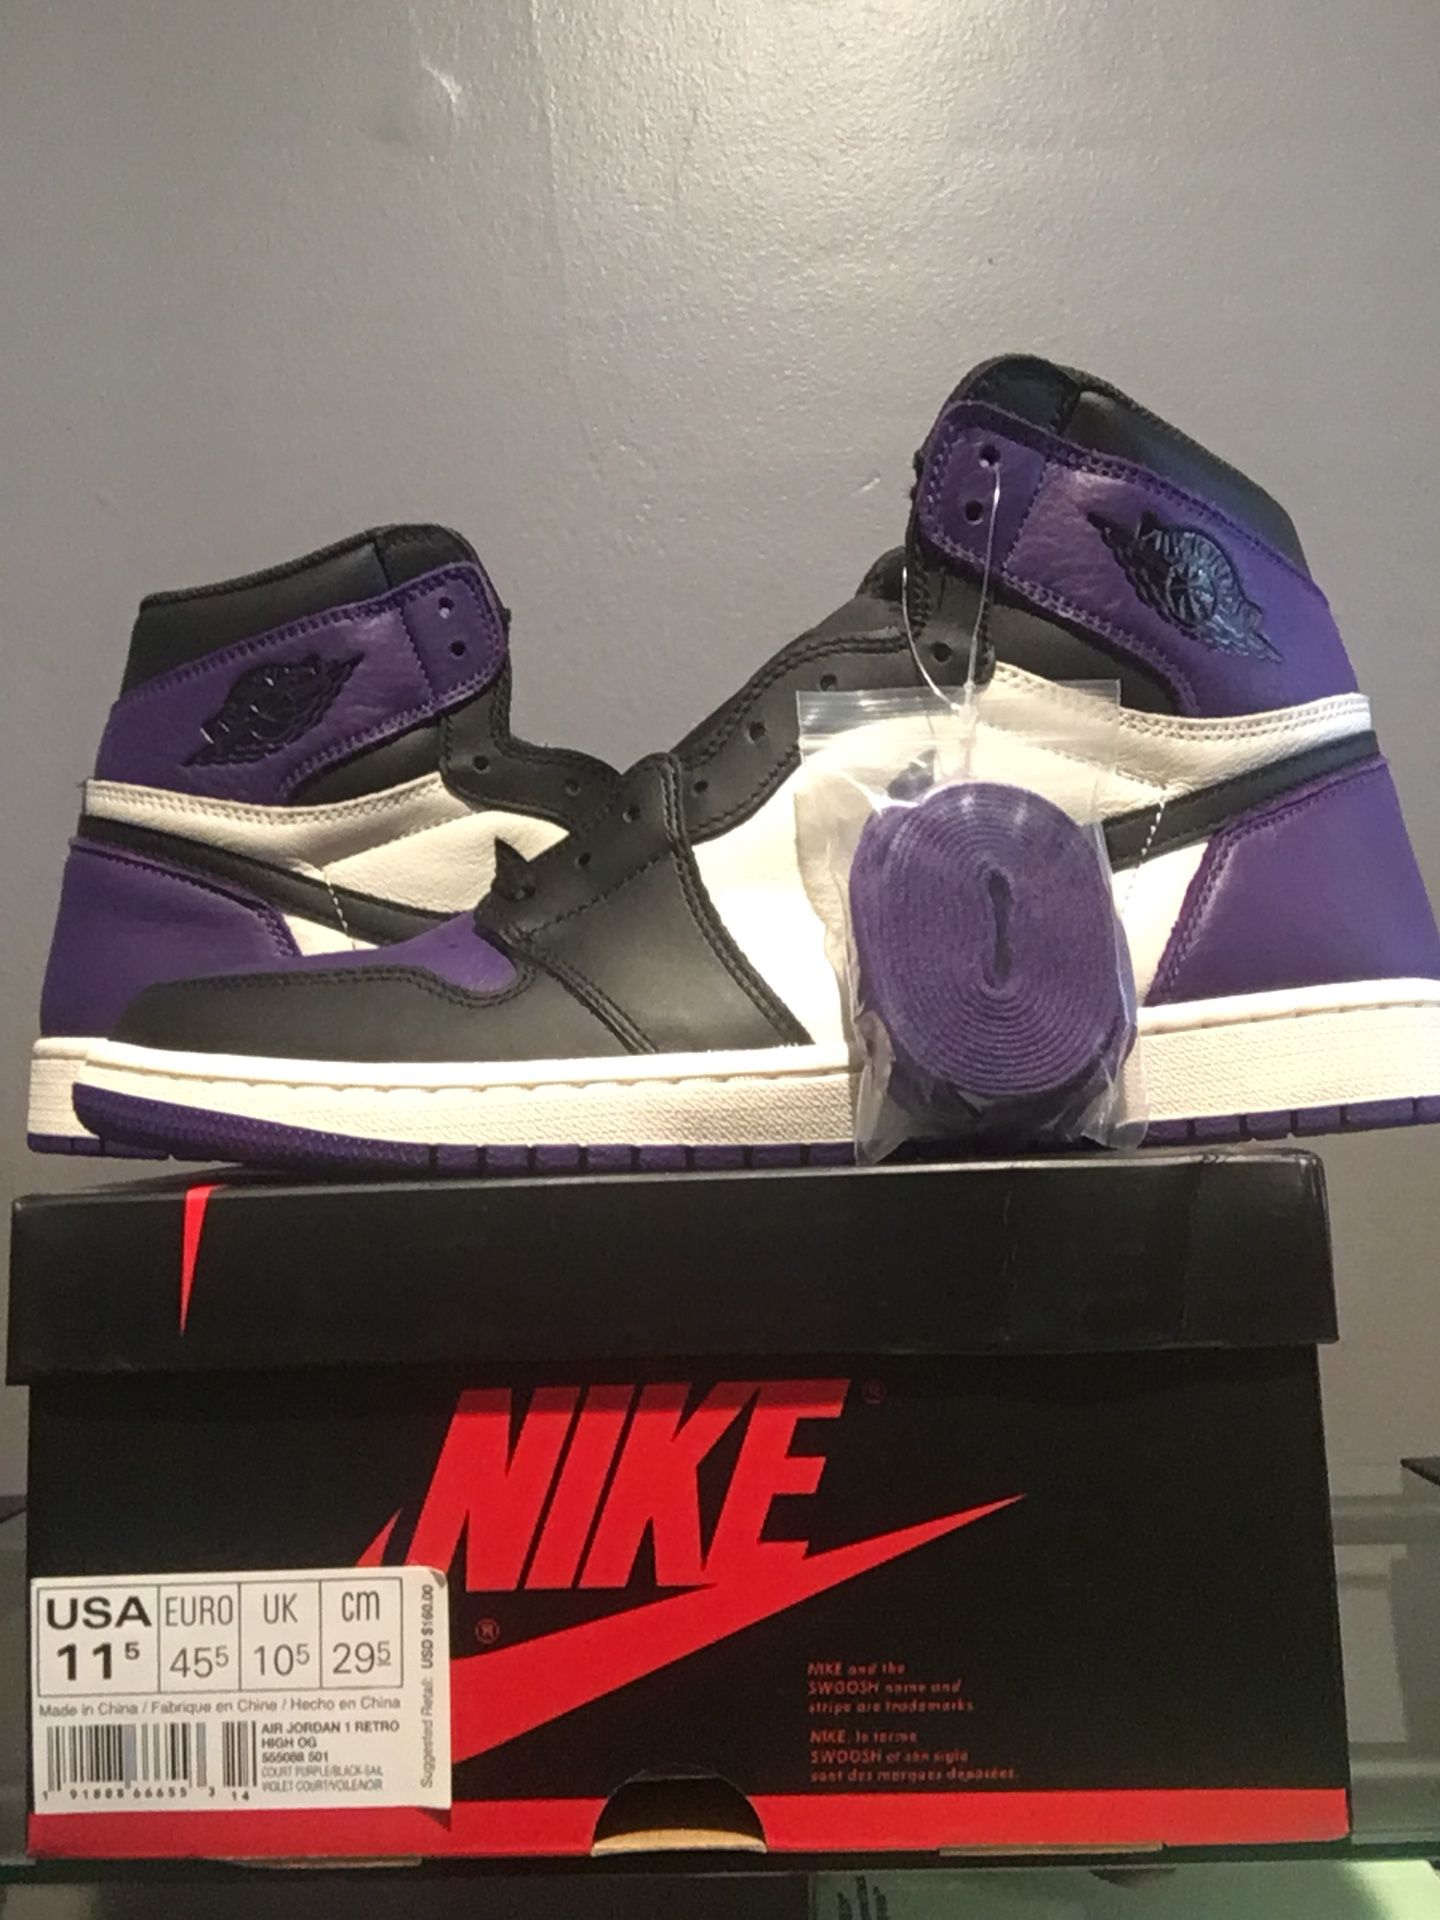 Nike Air Jordan 1 “Court Purple” size 11.5